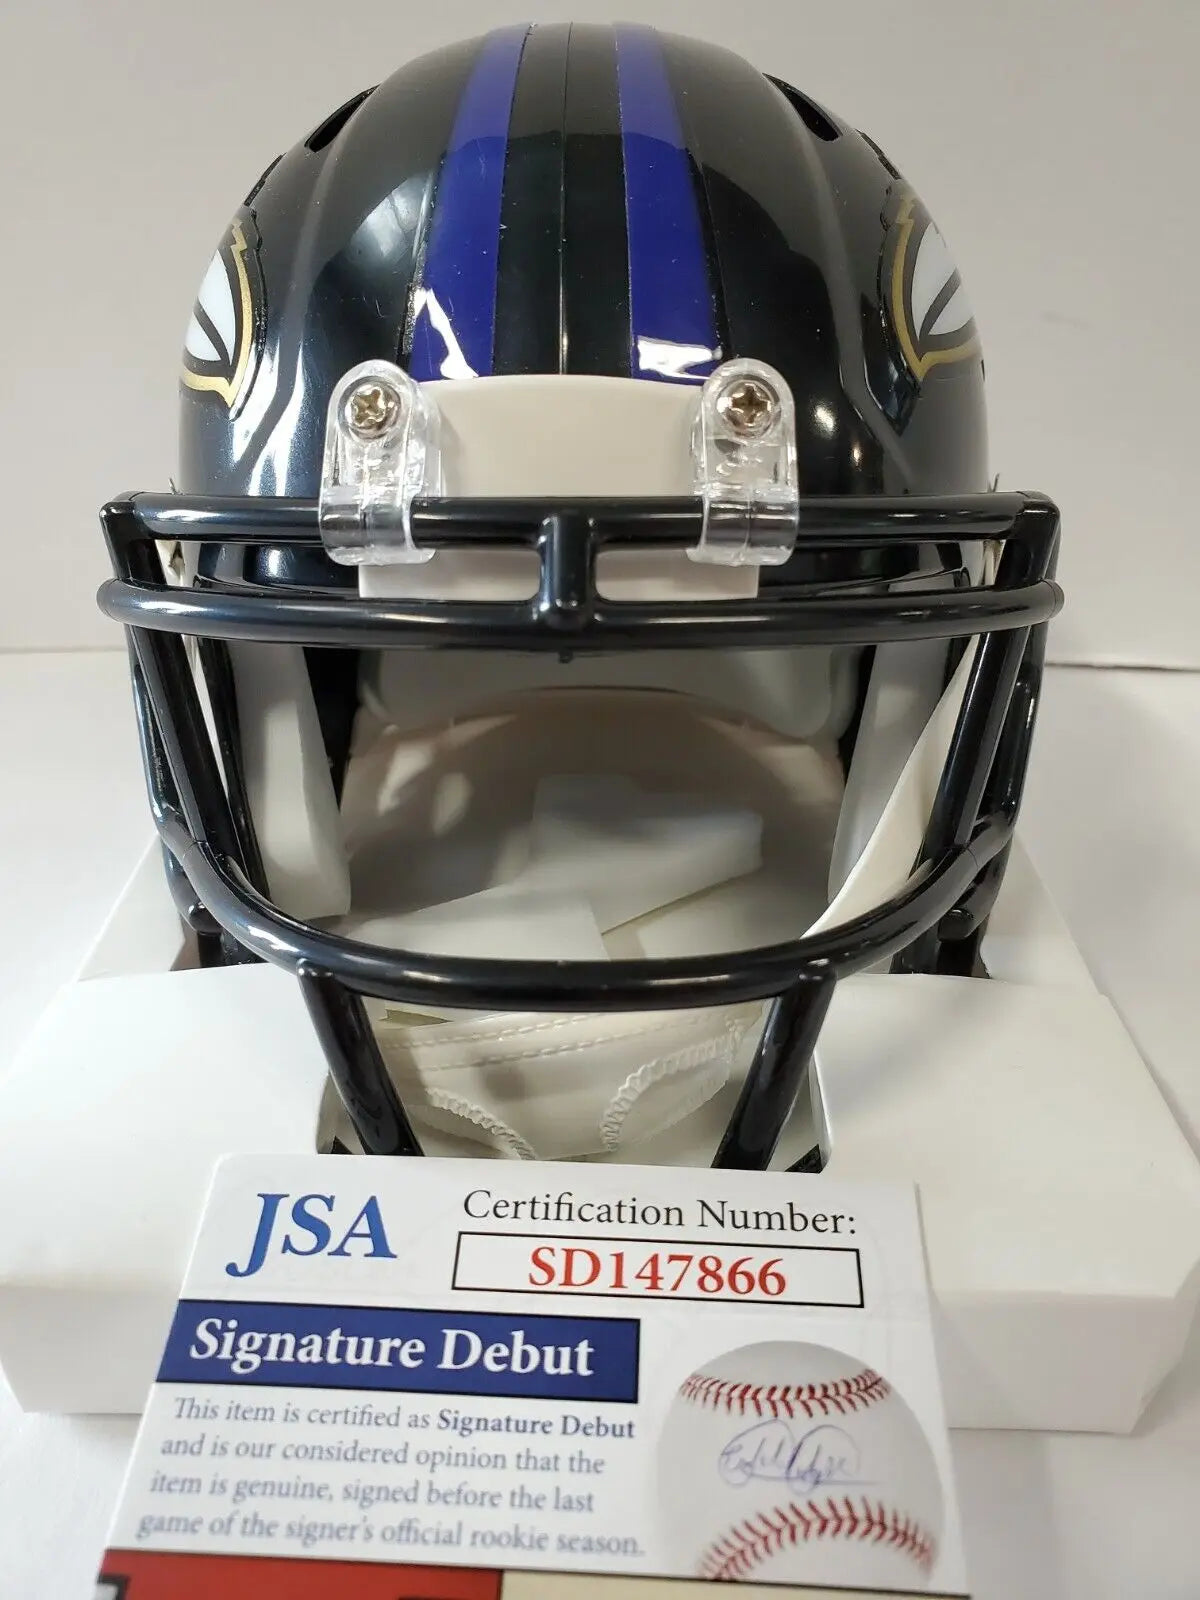 MVP Authentics Baltimore Ravens Odafe Jayson Oweh Autographed Speed Mini Helmet Jsa Coa 112.50 sports jersey framing , jersey framing